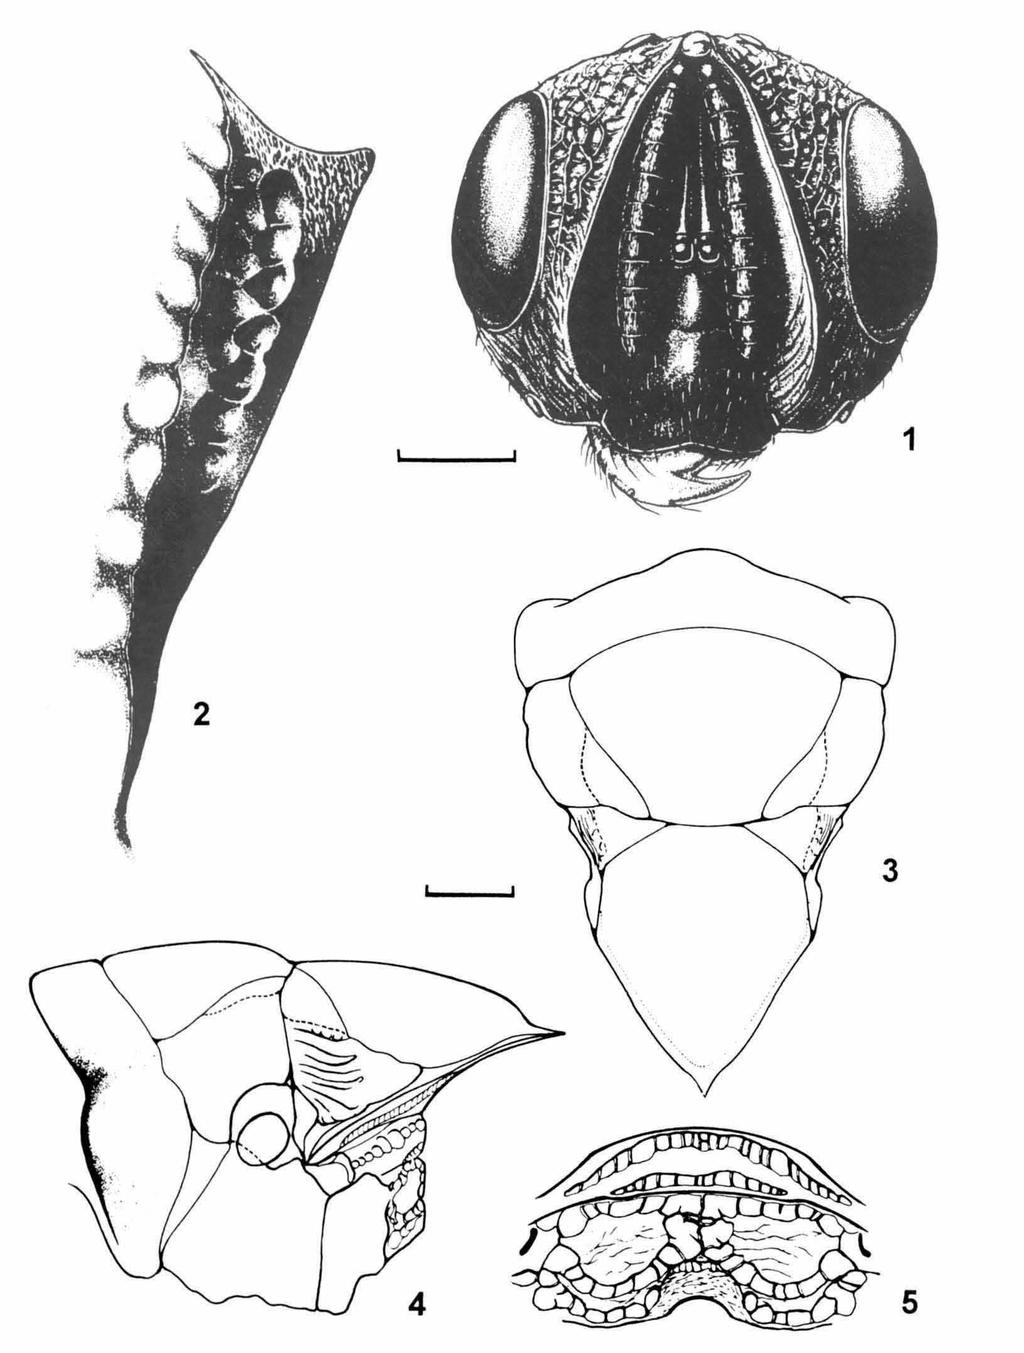 224 Darling. New species of Krombeinius from Indonesia. Zool. Med. Leiden 69 (1995) Figs. 1-5, Krombeinius dictyon, spec. nov.